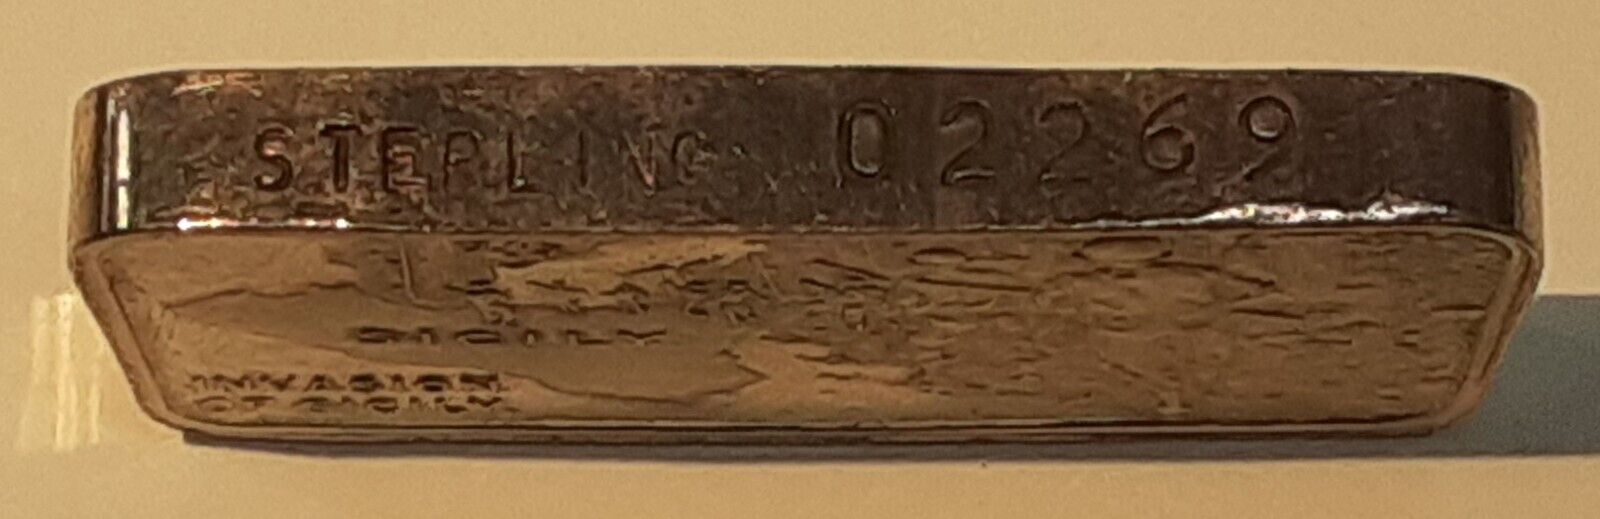 1974-78 Lincoln Mint .925 Silver 45.7 Gram Bar Invasion of Sicily SB7